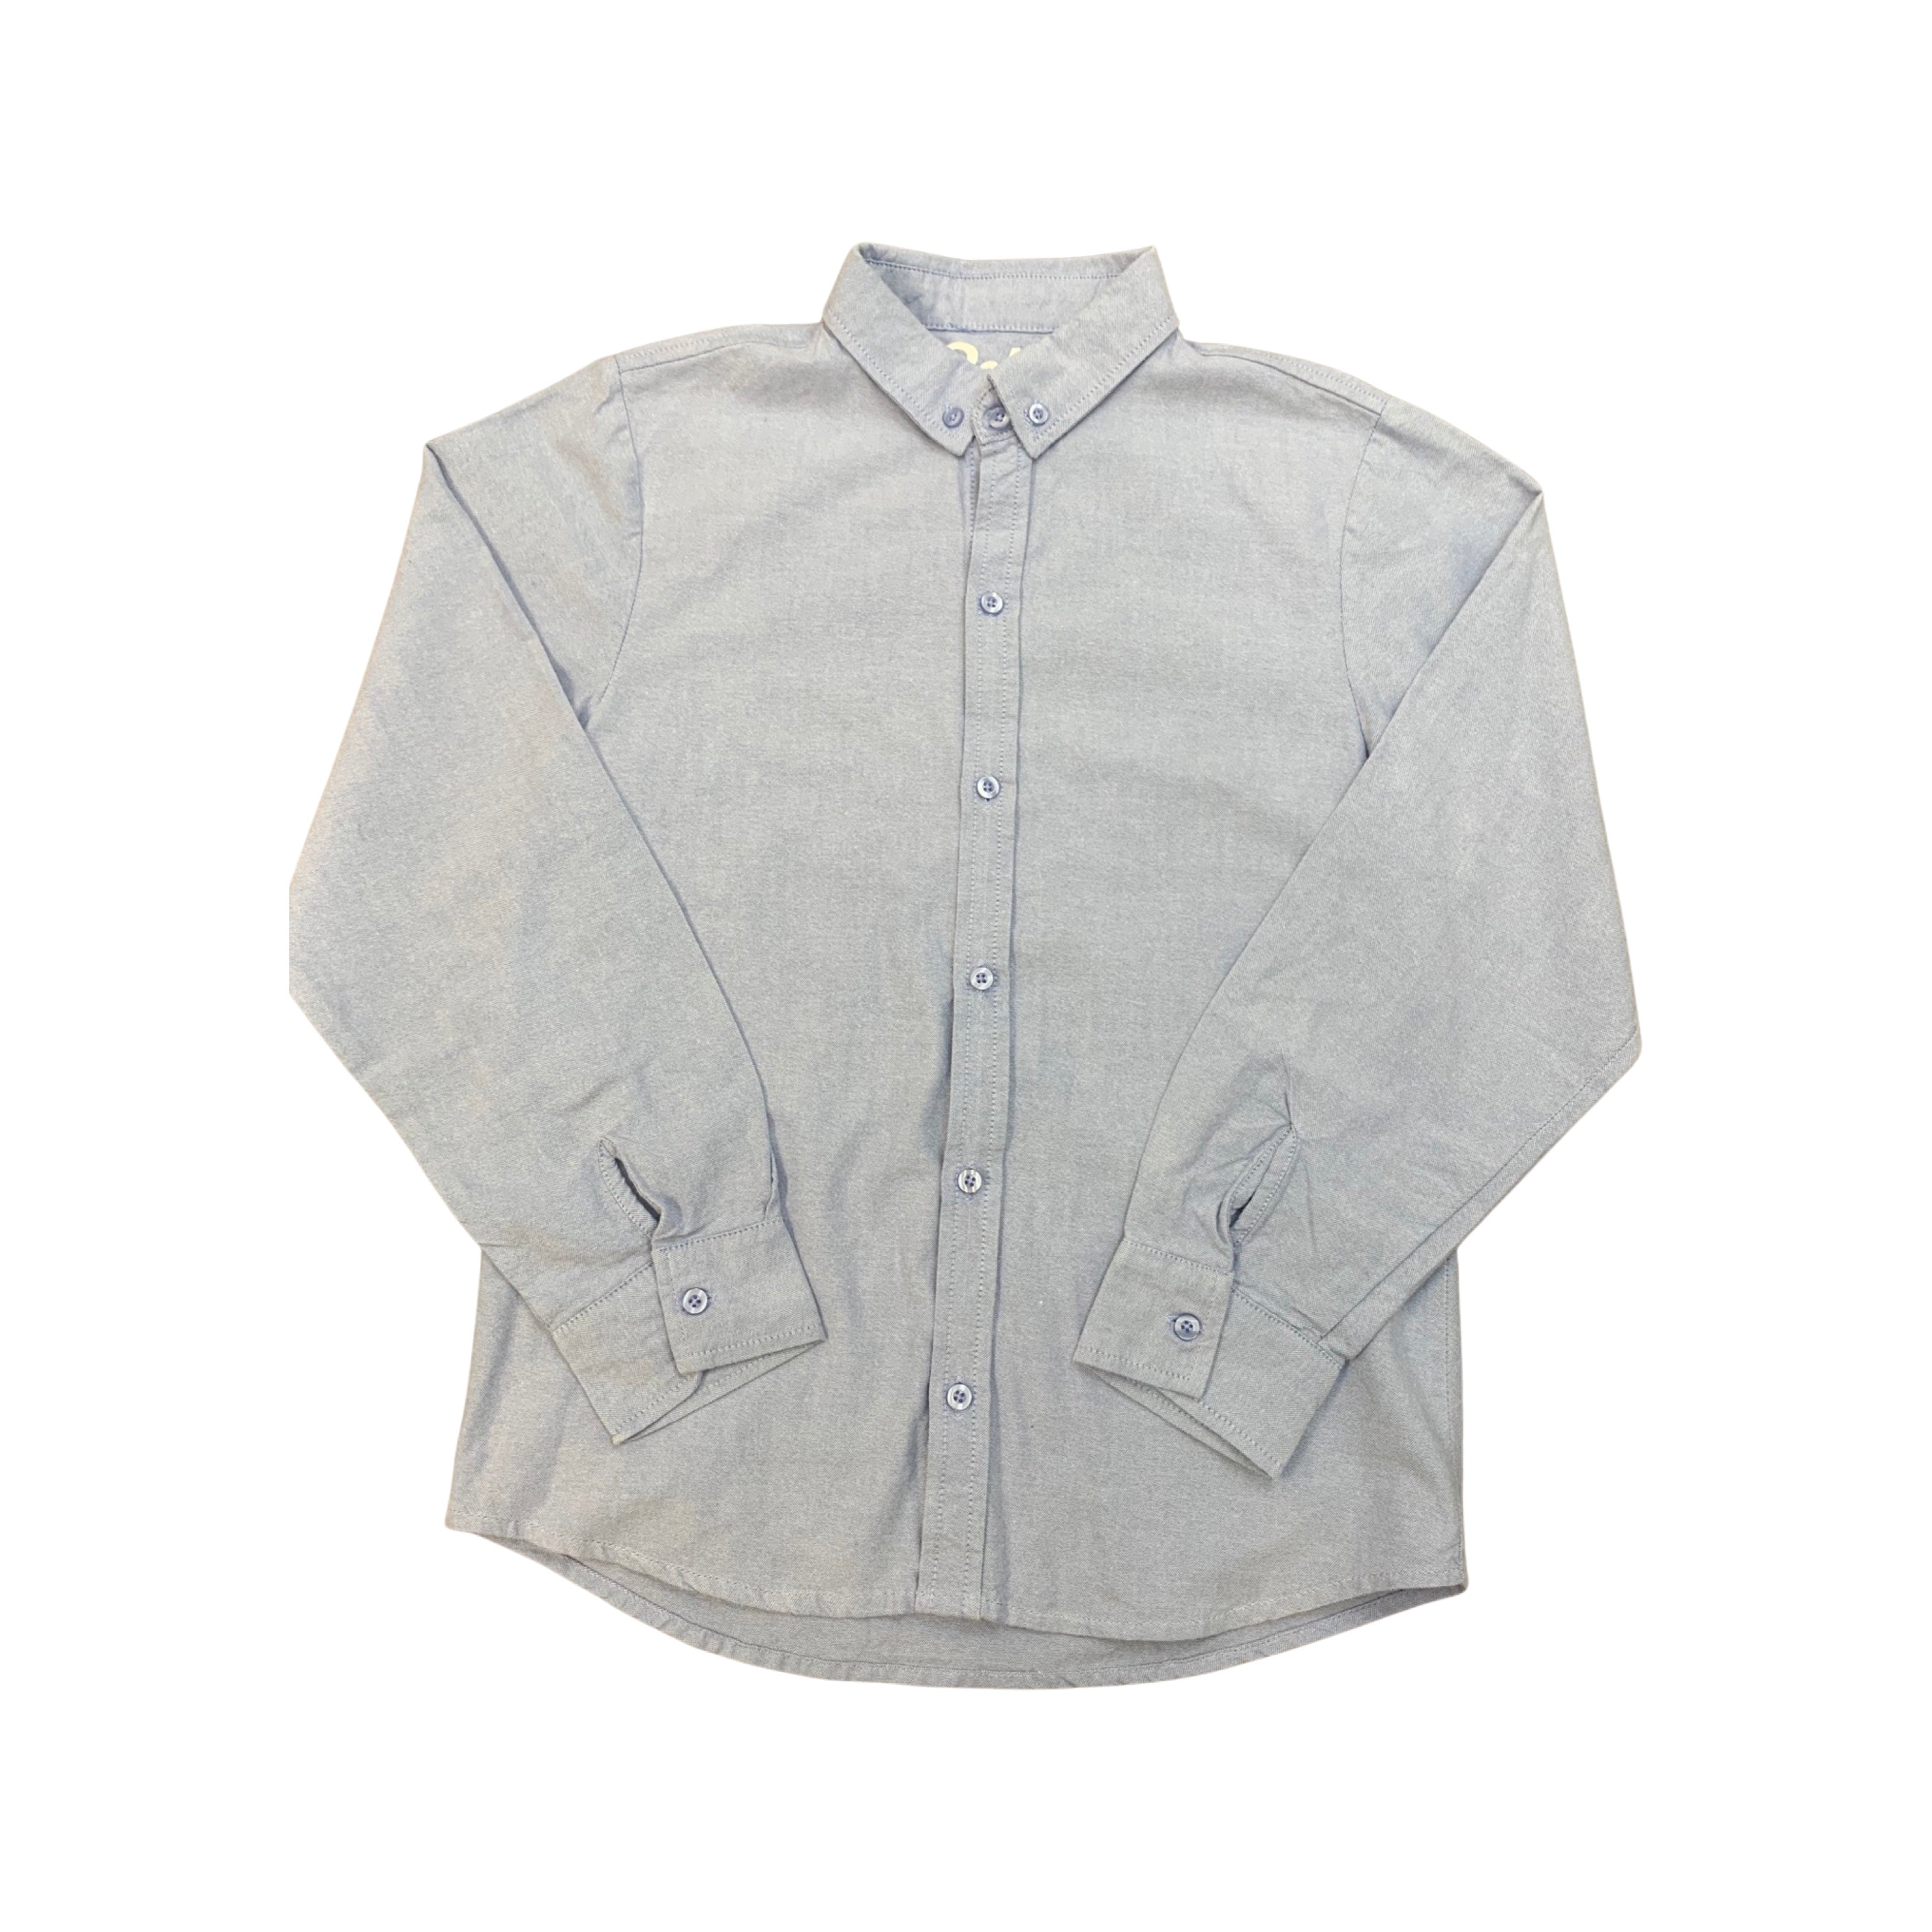 Primark Long Sleeve Shirt 11-12 Years